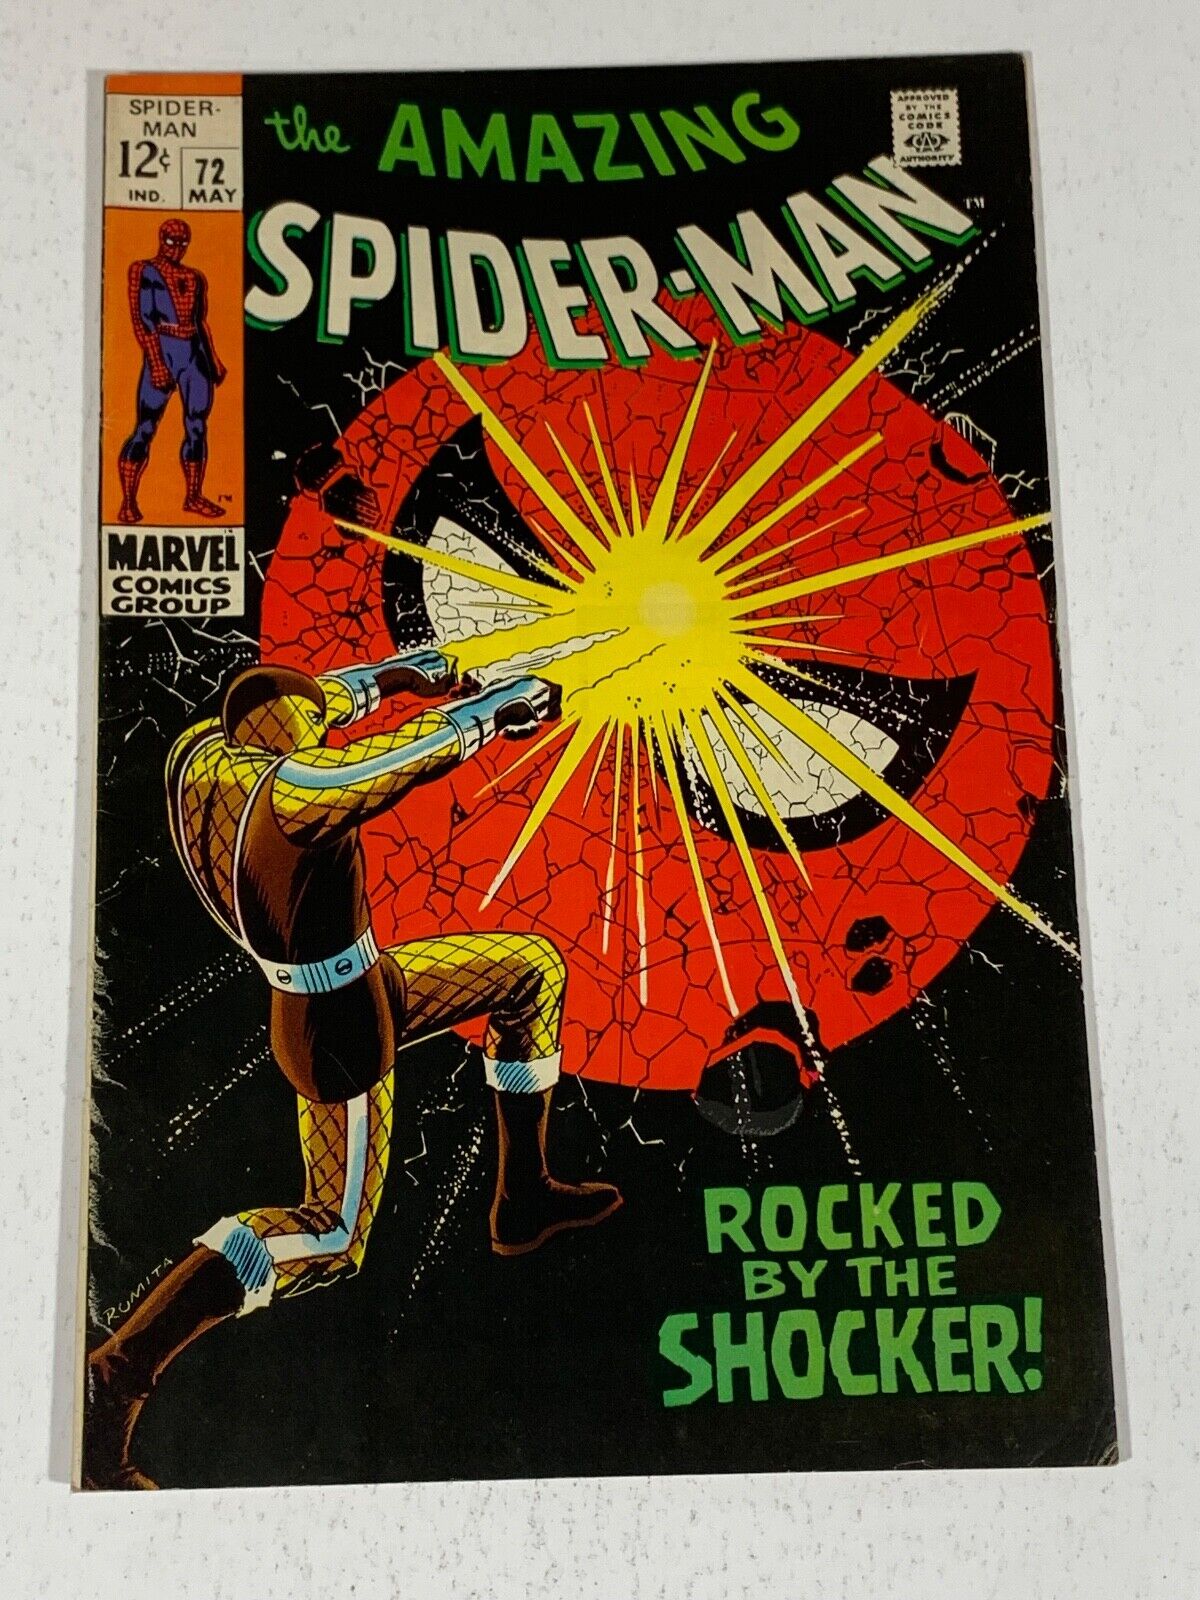 Amazing Spider-Man #72 (vol 1), May 1969 - High Grade